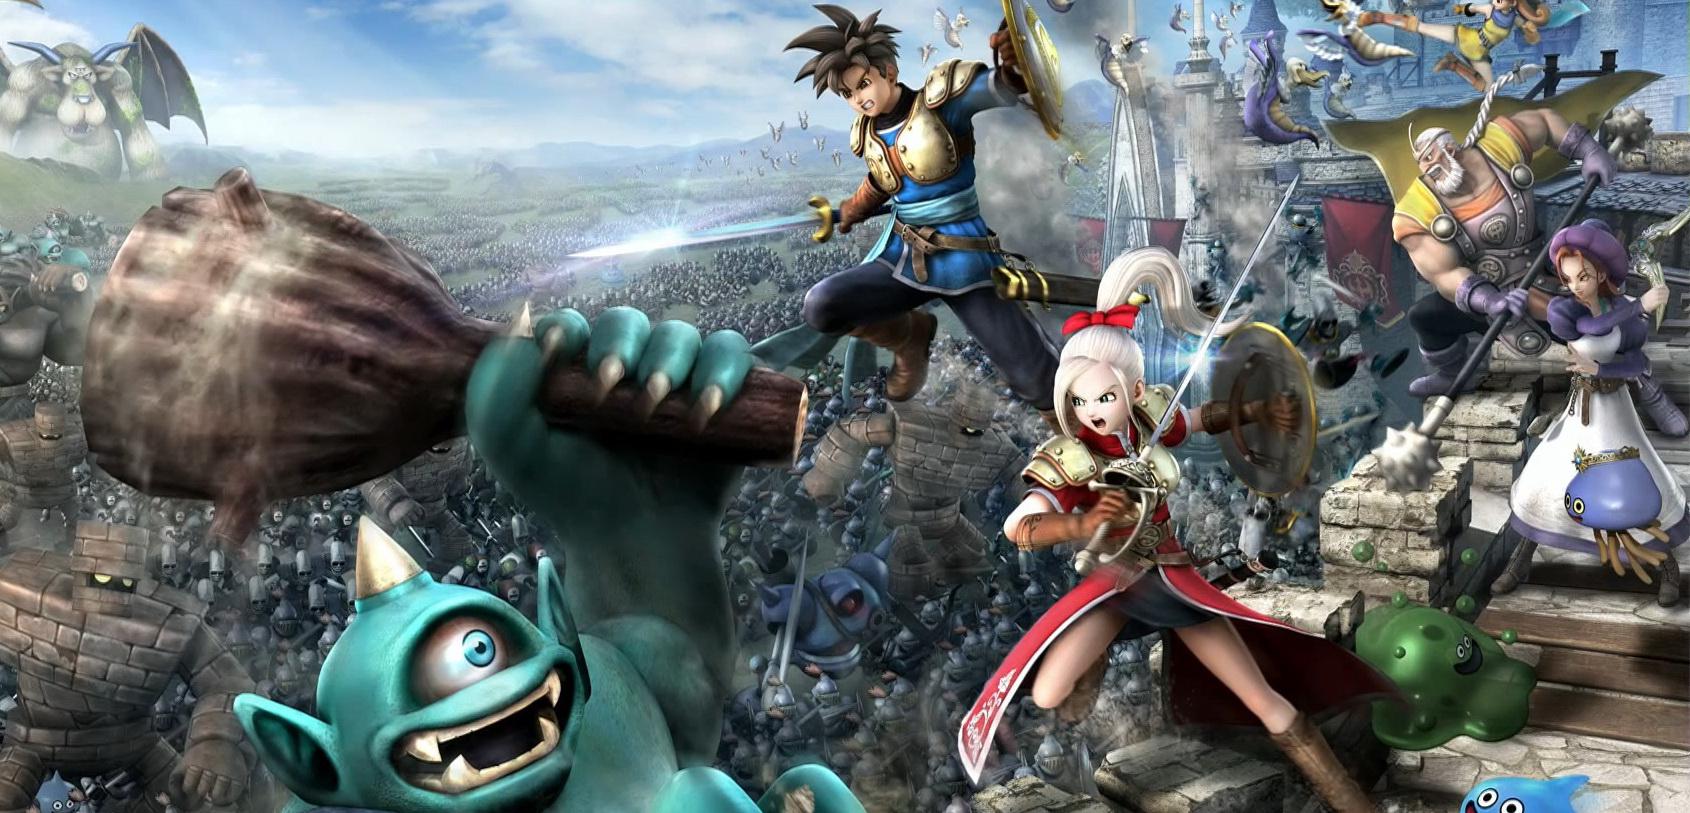 Kolejny mocny exclusive PS4 - Dragon Quest: Heroes z dobrymi ocenami!